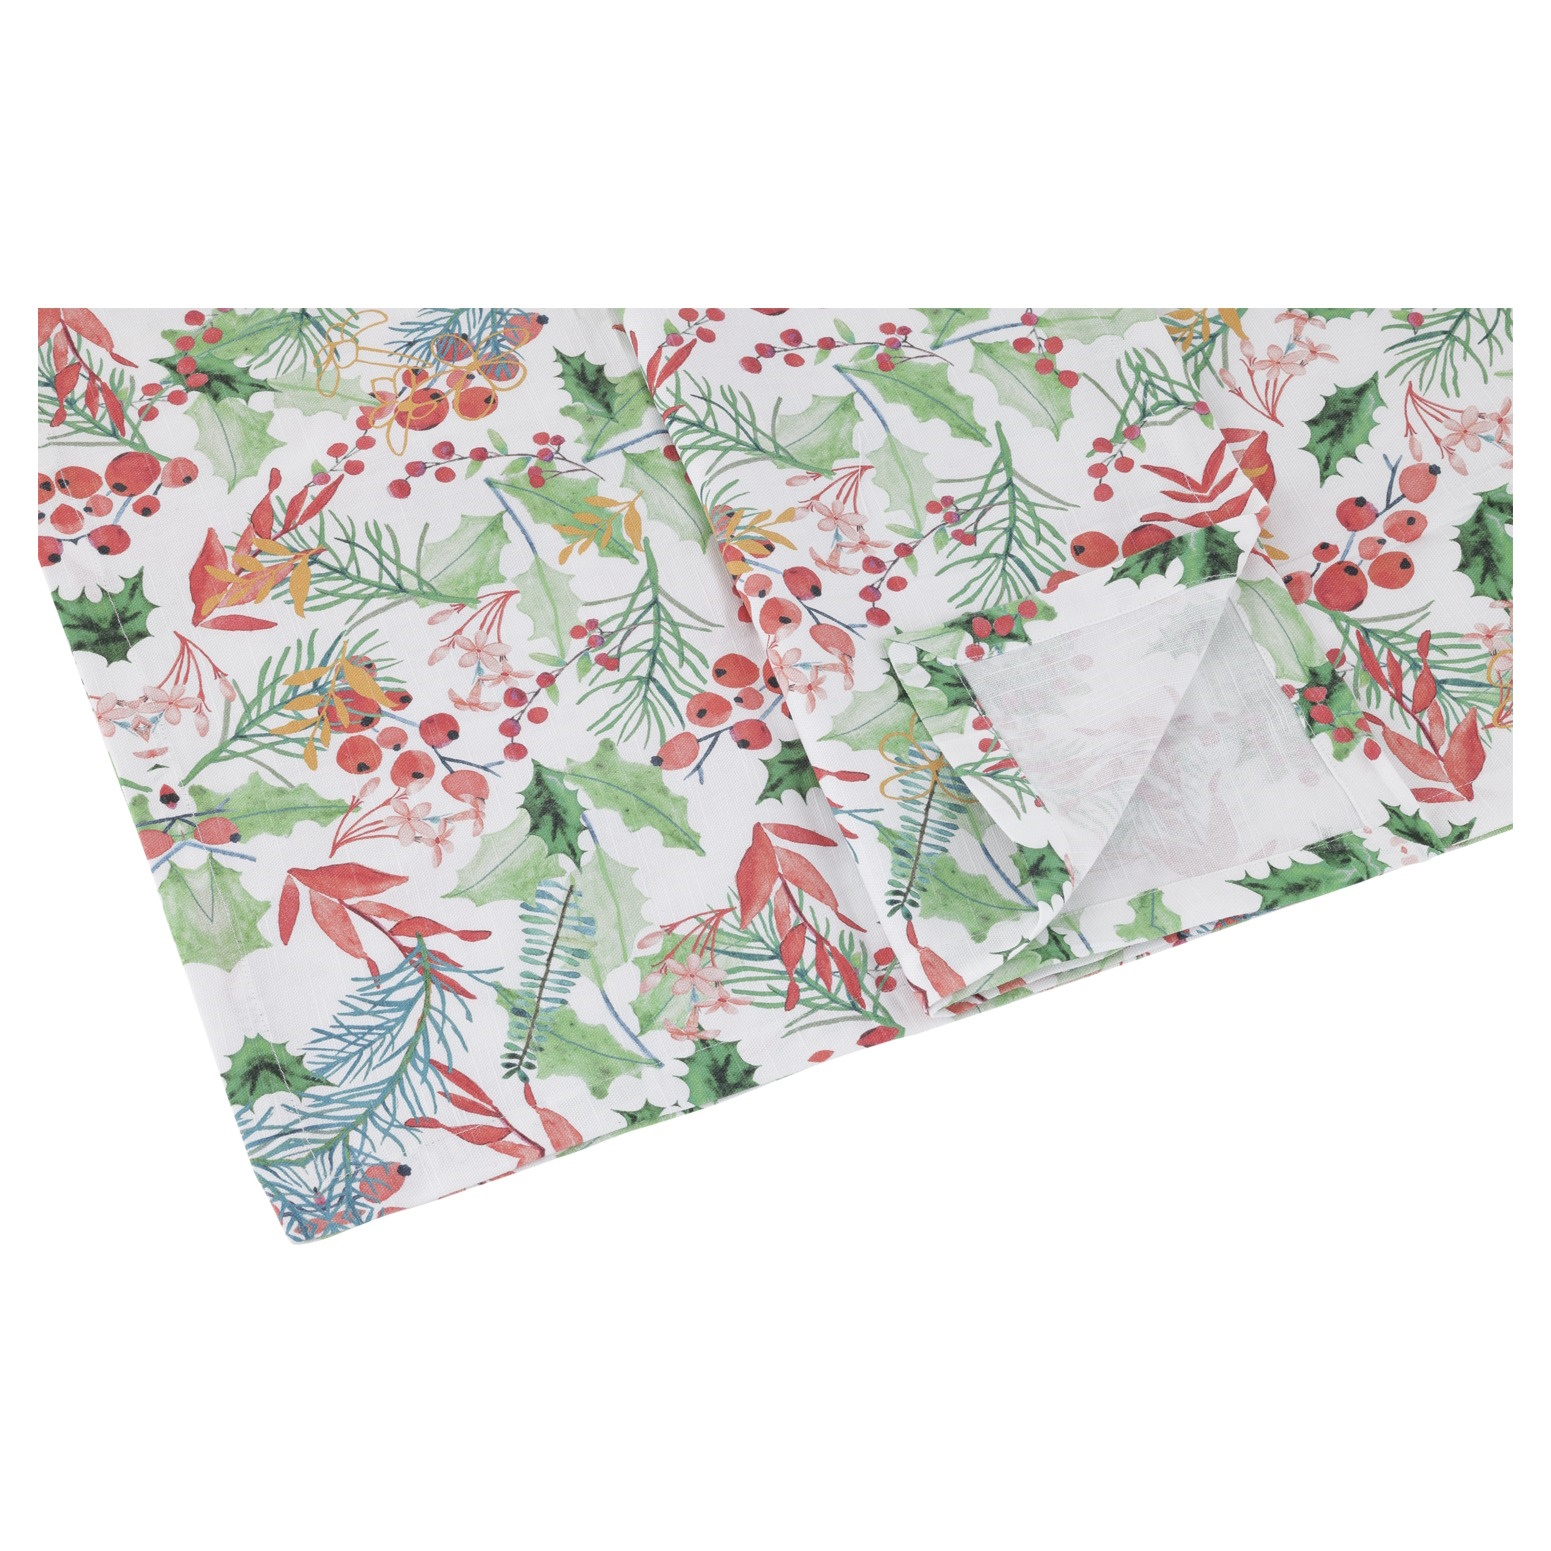 Maxwell & Williams Merry Berry Cotton Rectangular Tablecloth 270x150cm